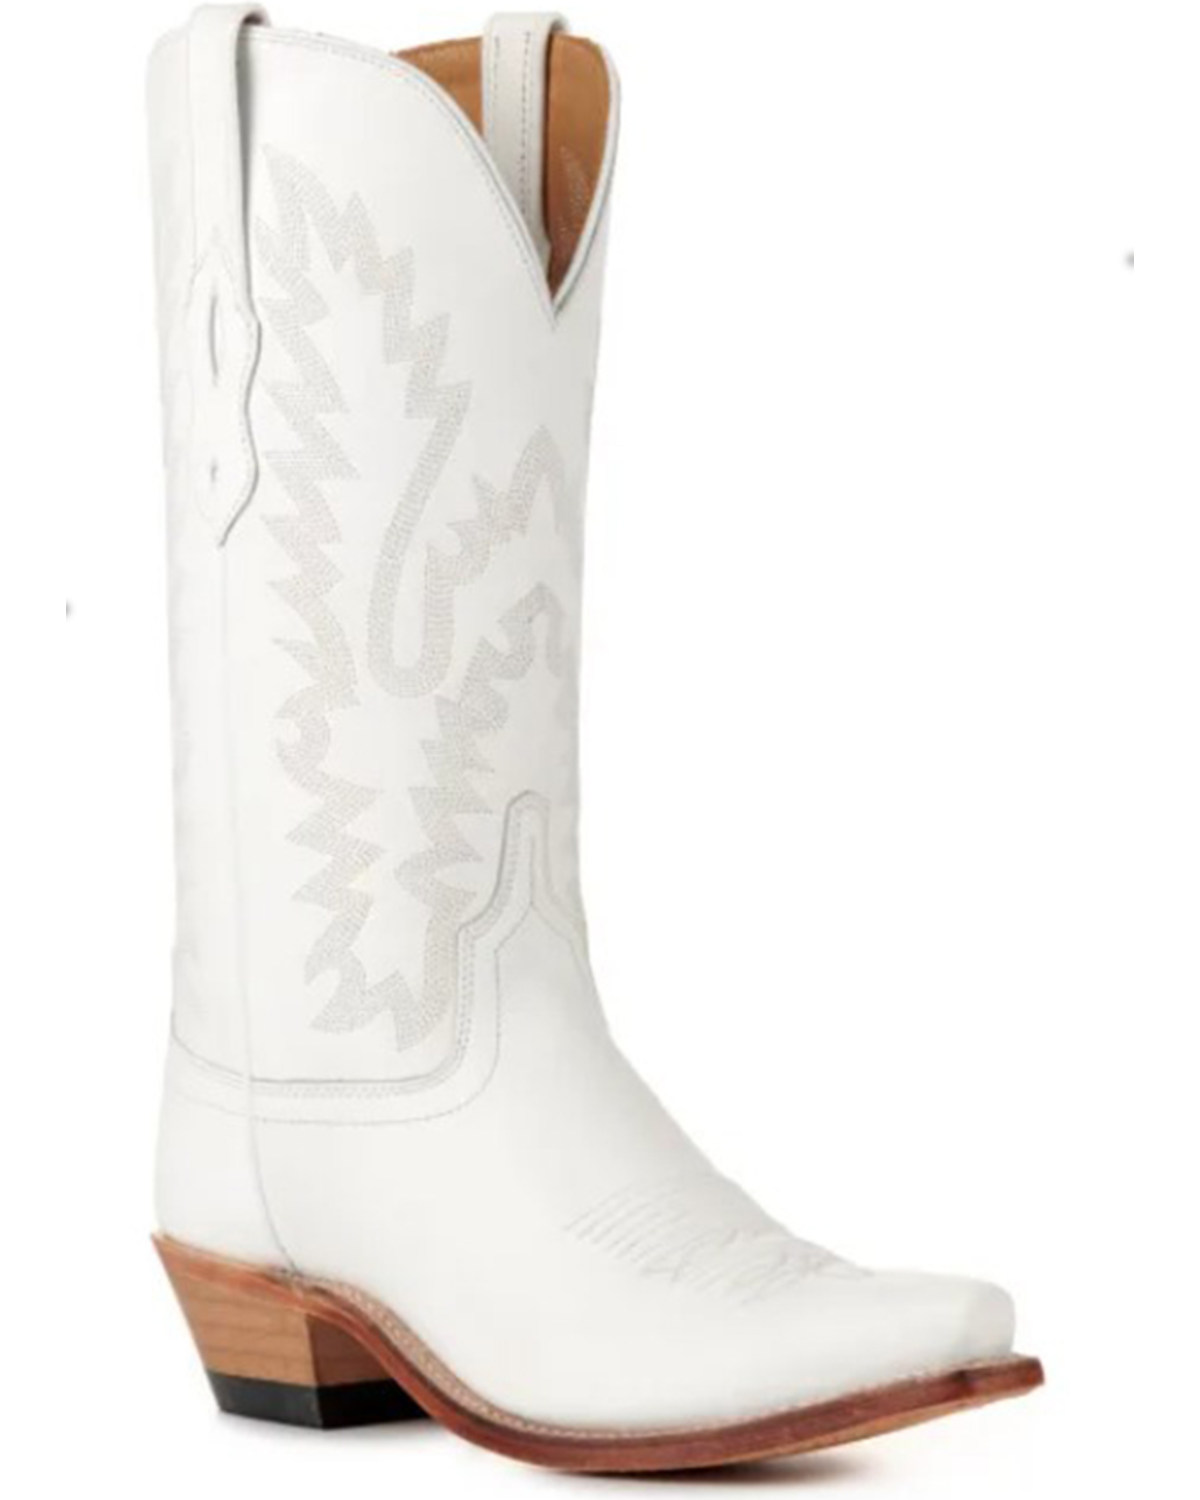 Old West Women's Western Boots - Snip Toe